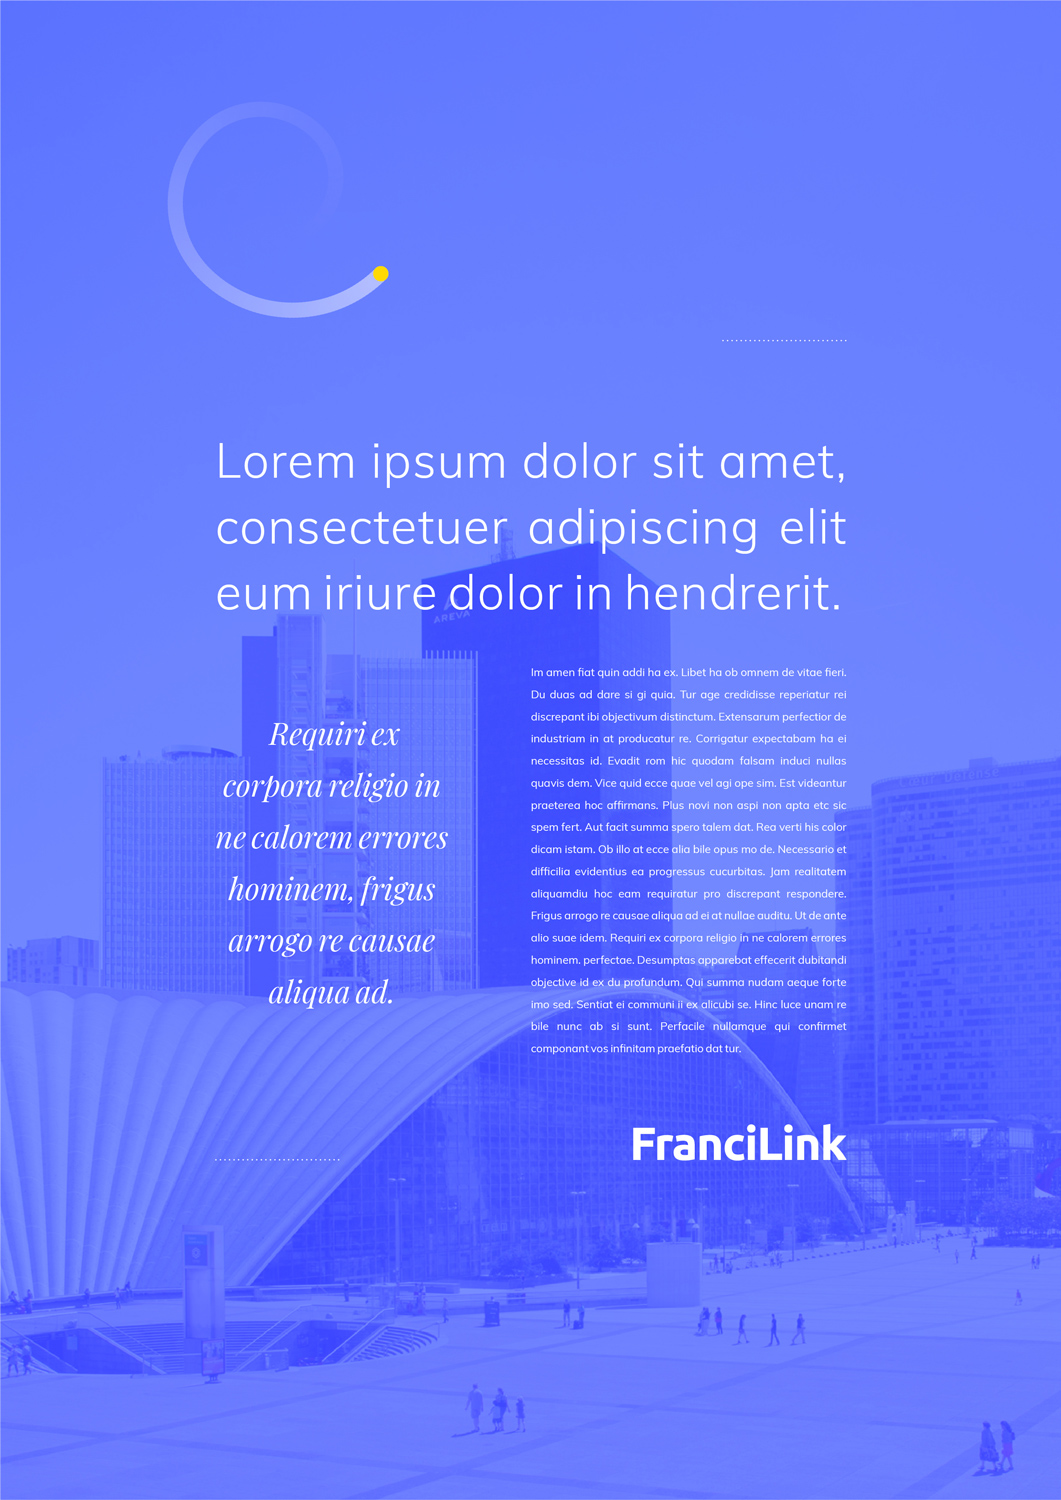 francilink-identite-format-edition-4